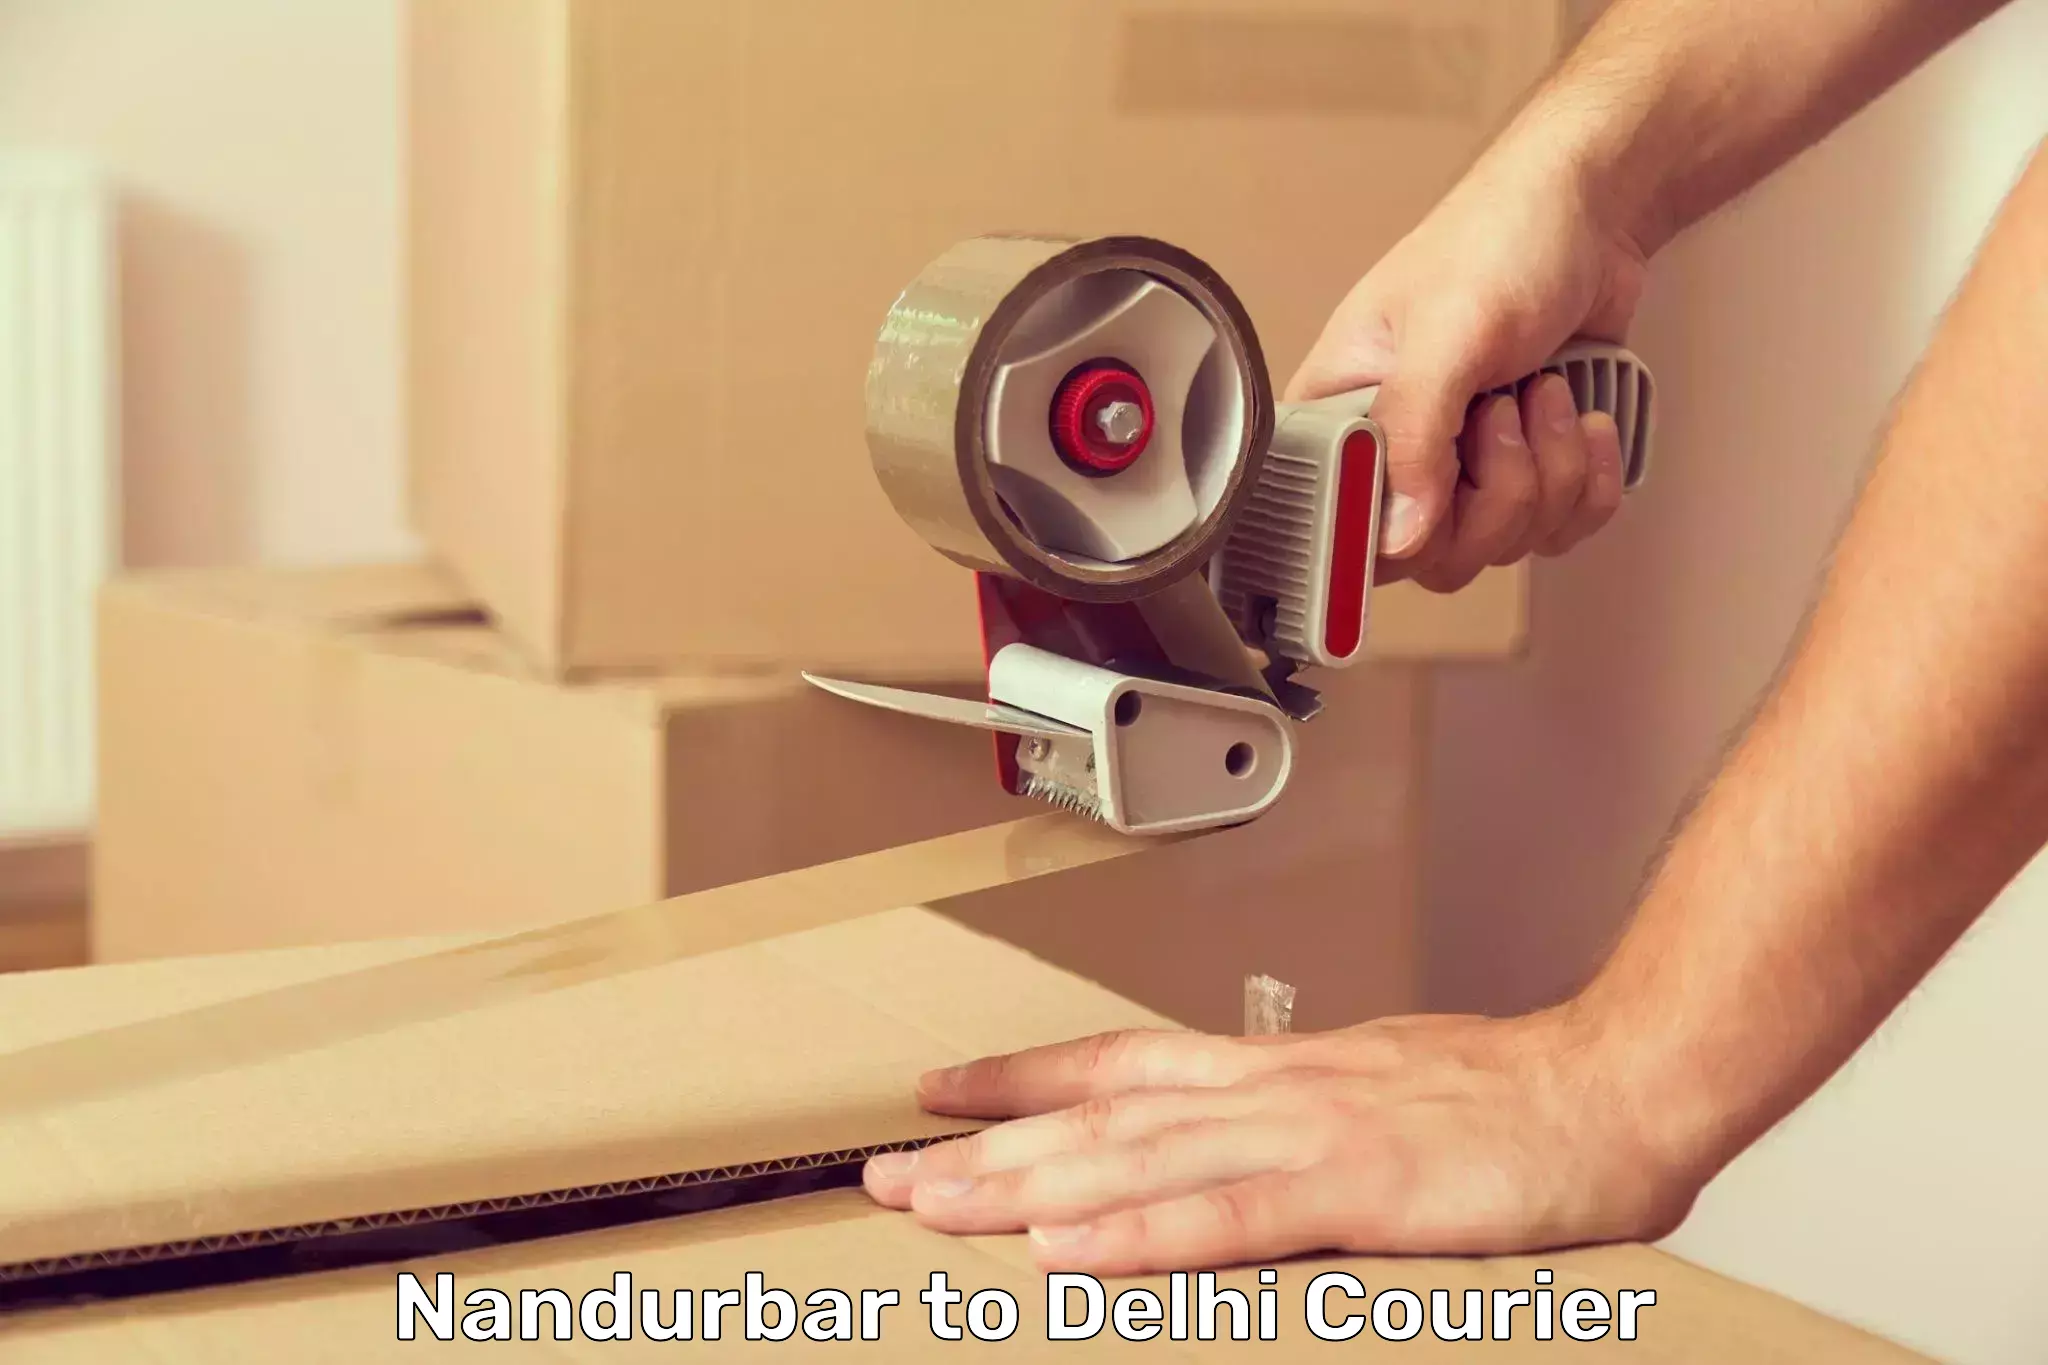 Digital courier platforms Nandurbar to Delhi